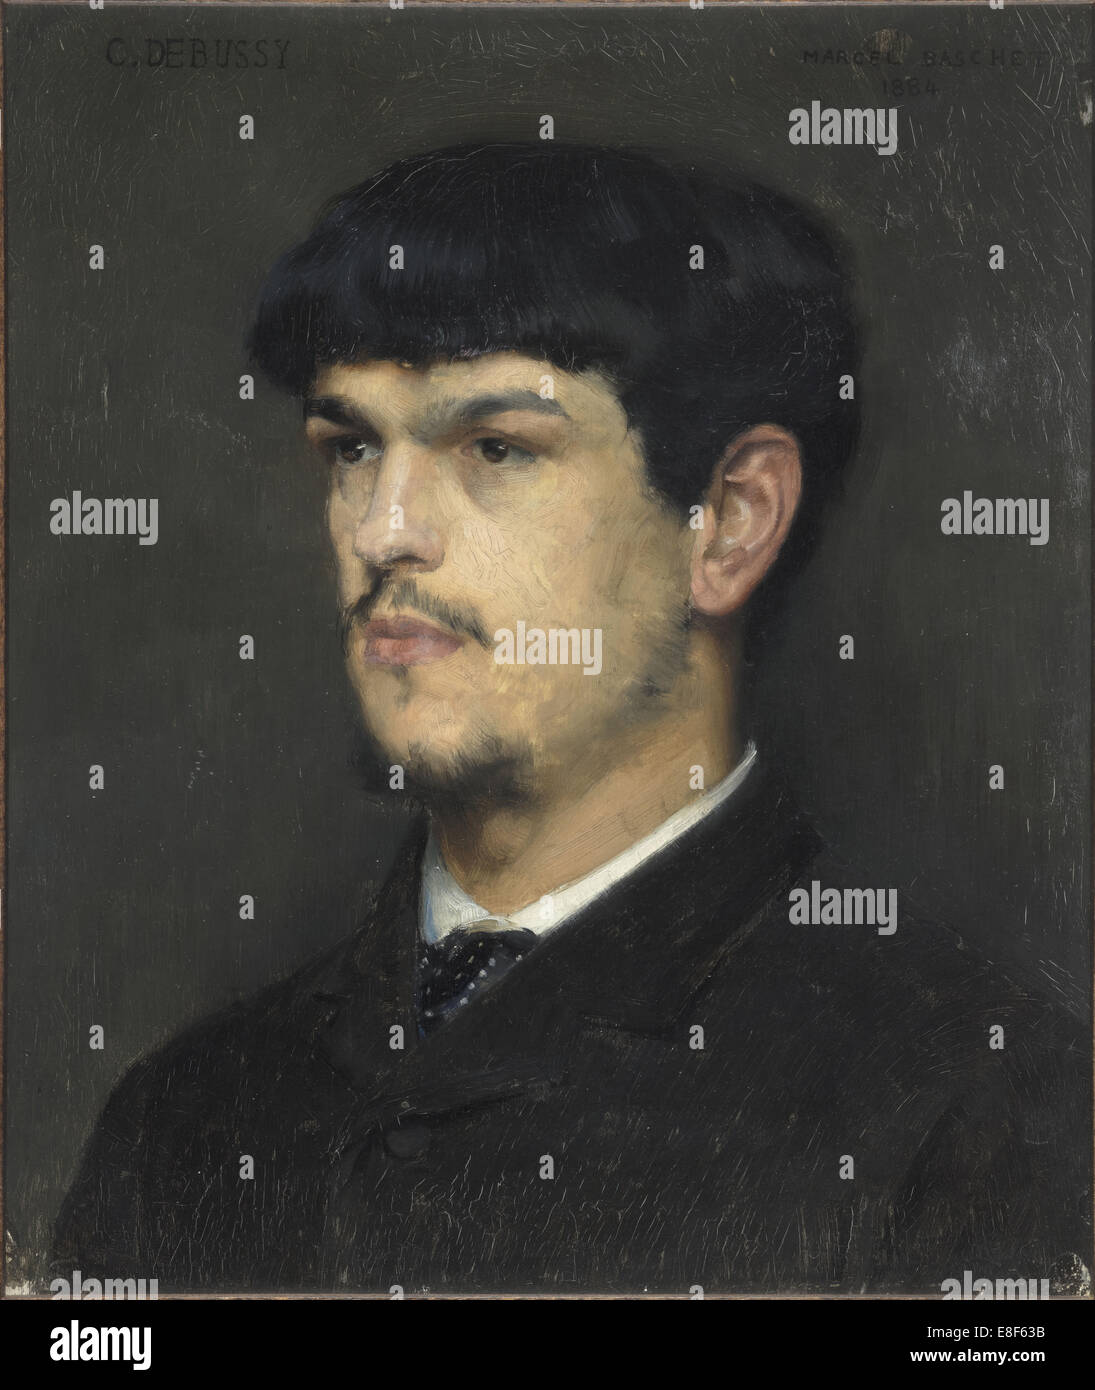 Claude Debussy. Artista: Baschet, Marcel André (1862-1941) Foto Stock